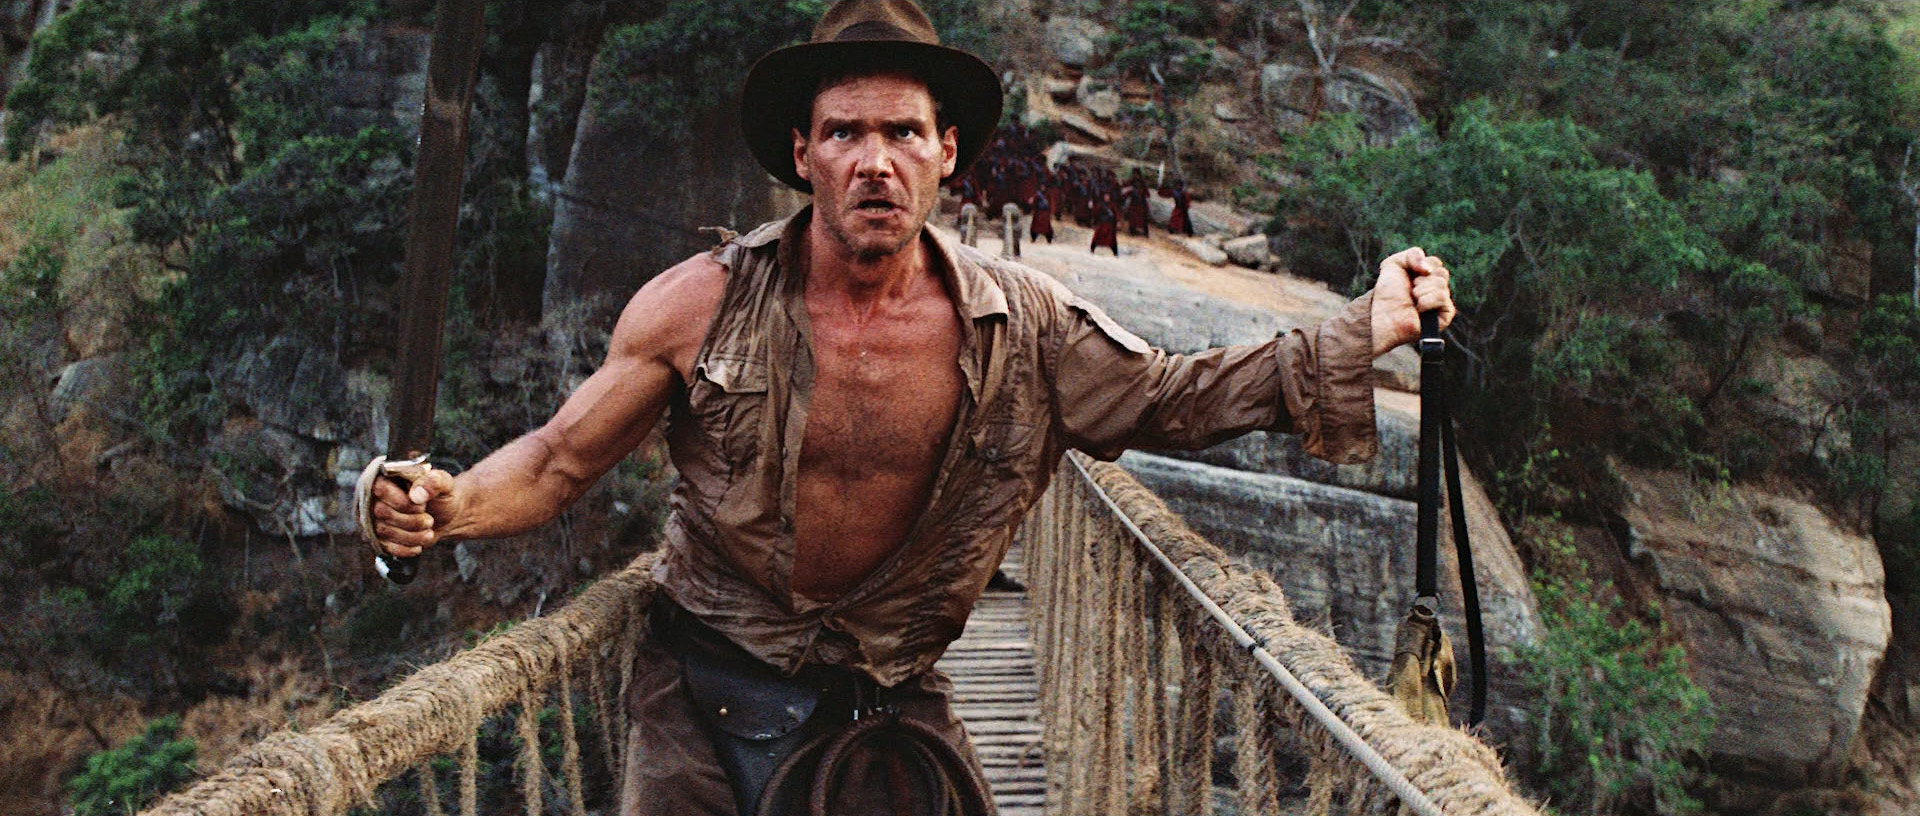 Indiana Jones and the Temple of Doom - bridge scene